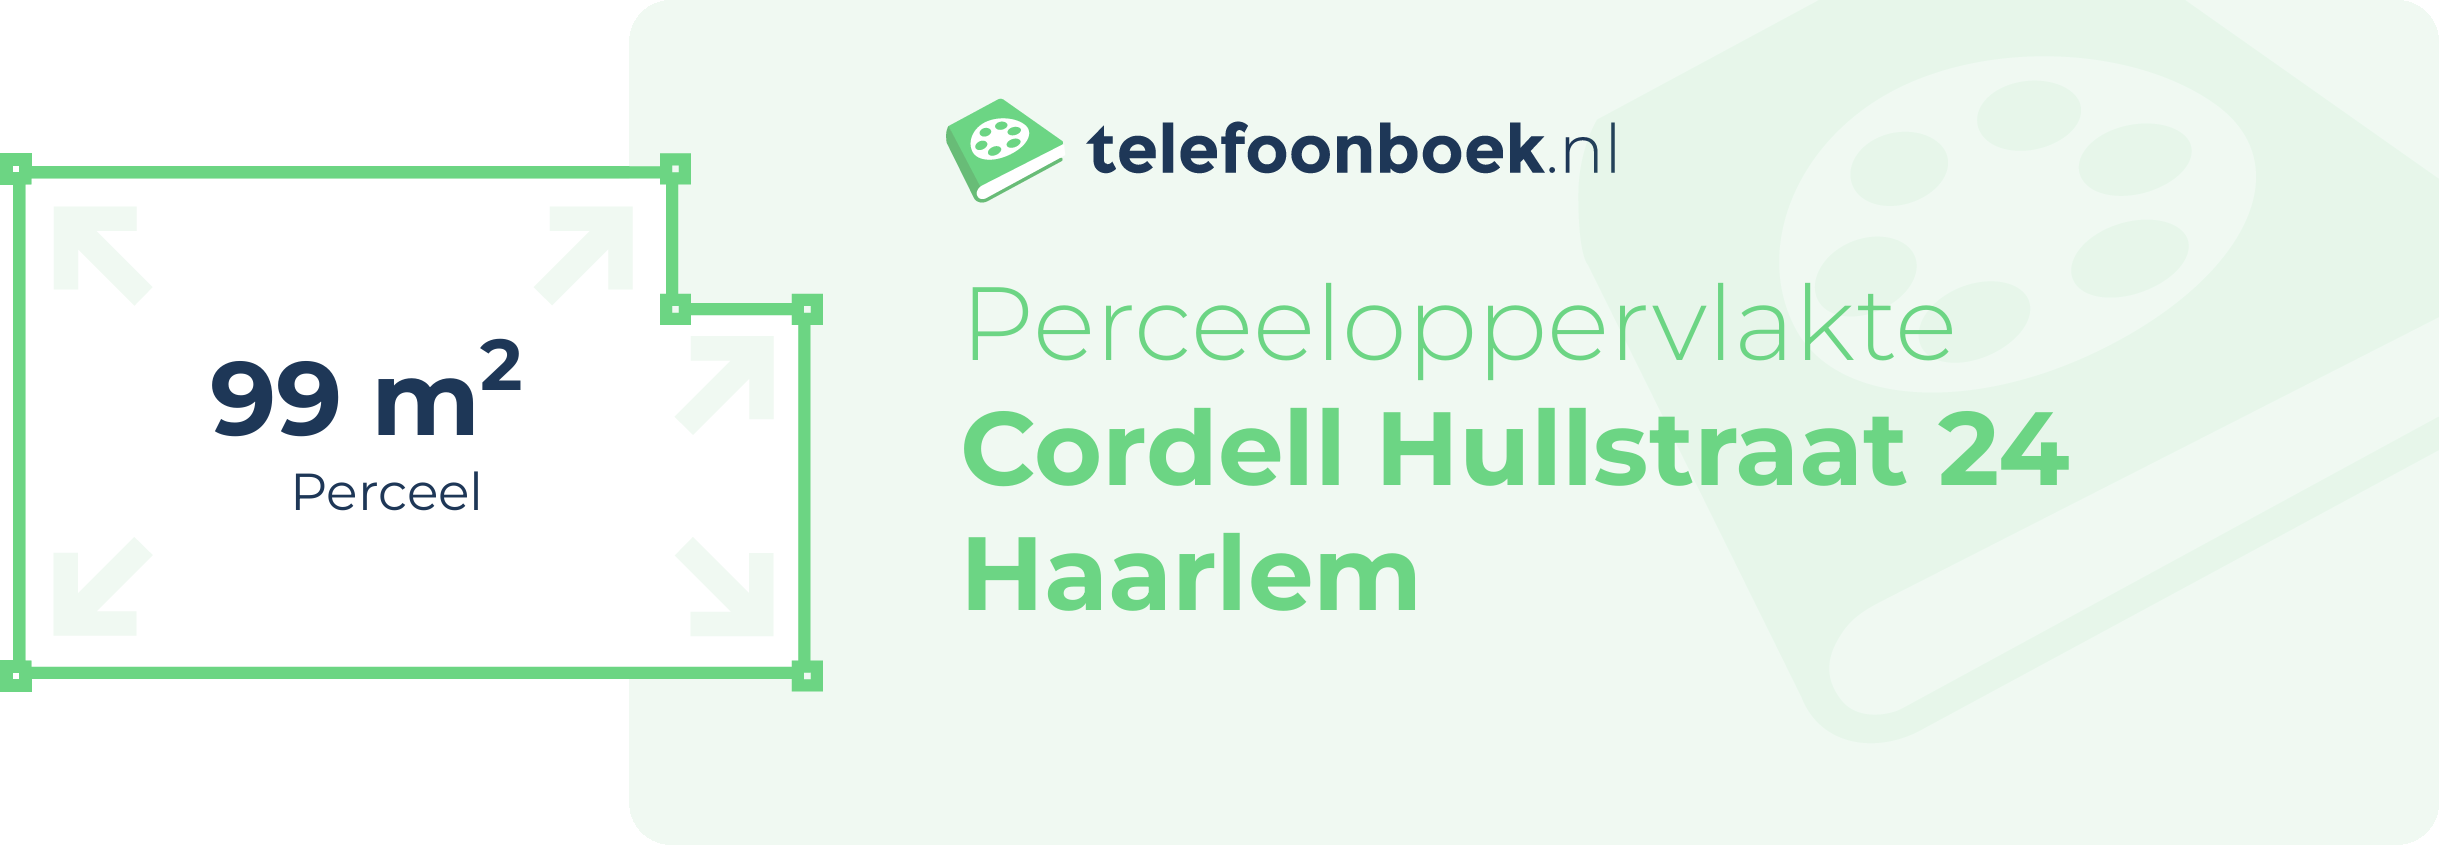 Perceeloppervlakte Cordell Hullstraat 24 Haarlem